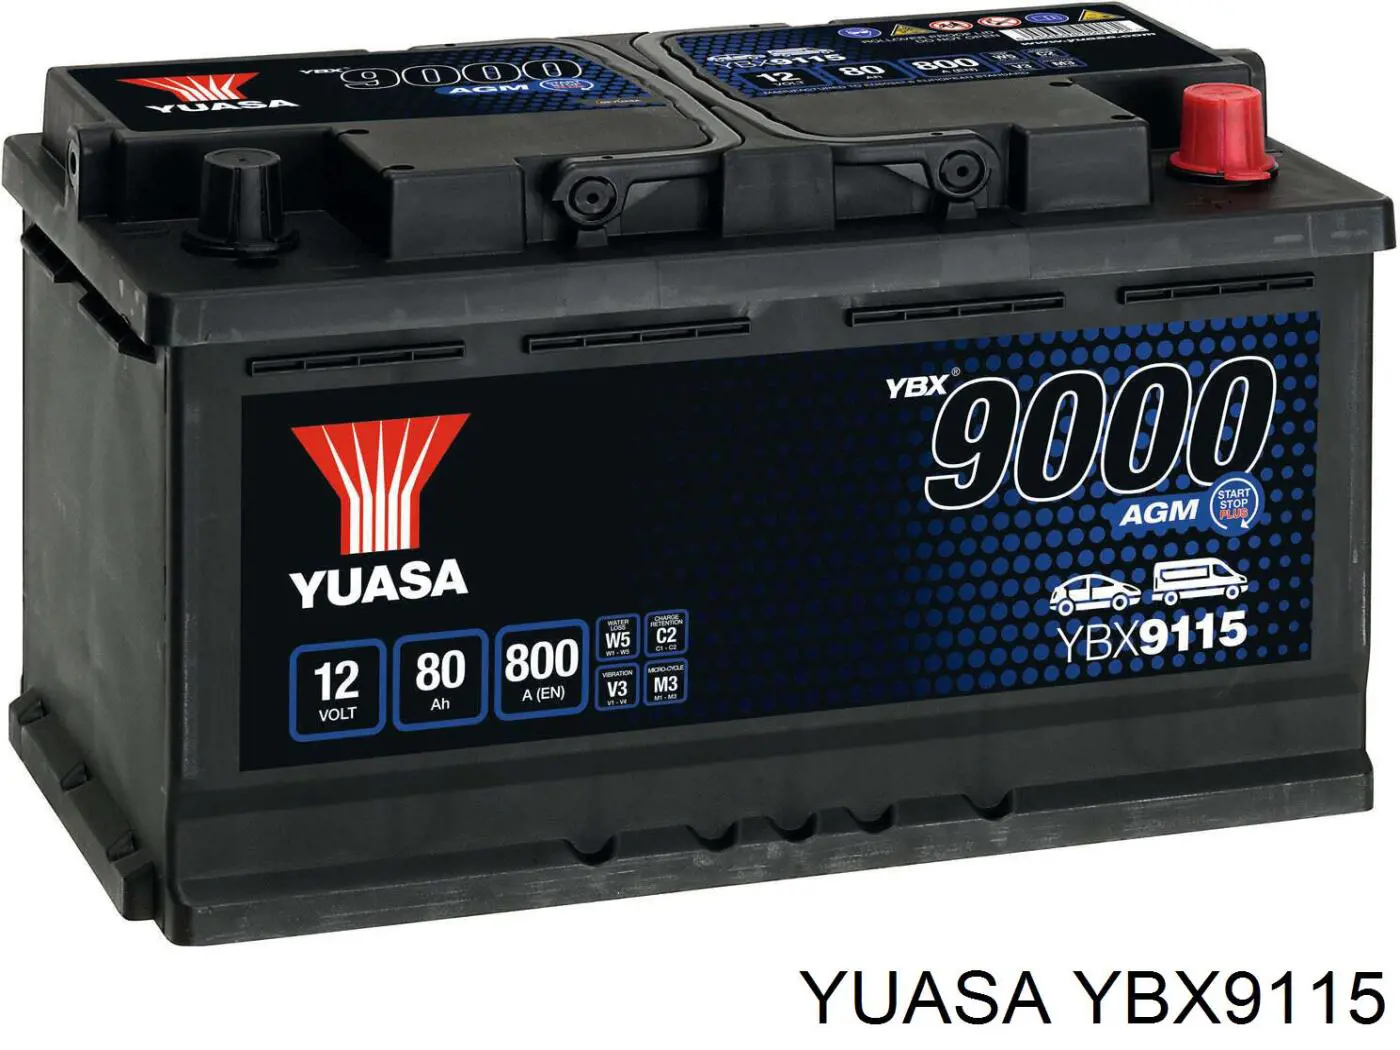 YBX9115 Yuasa bateria recarregável (pilha)